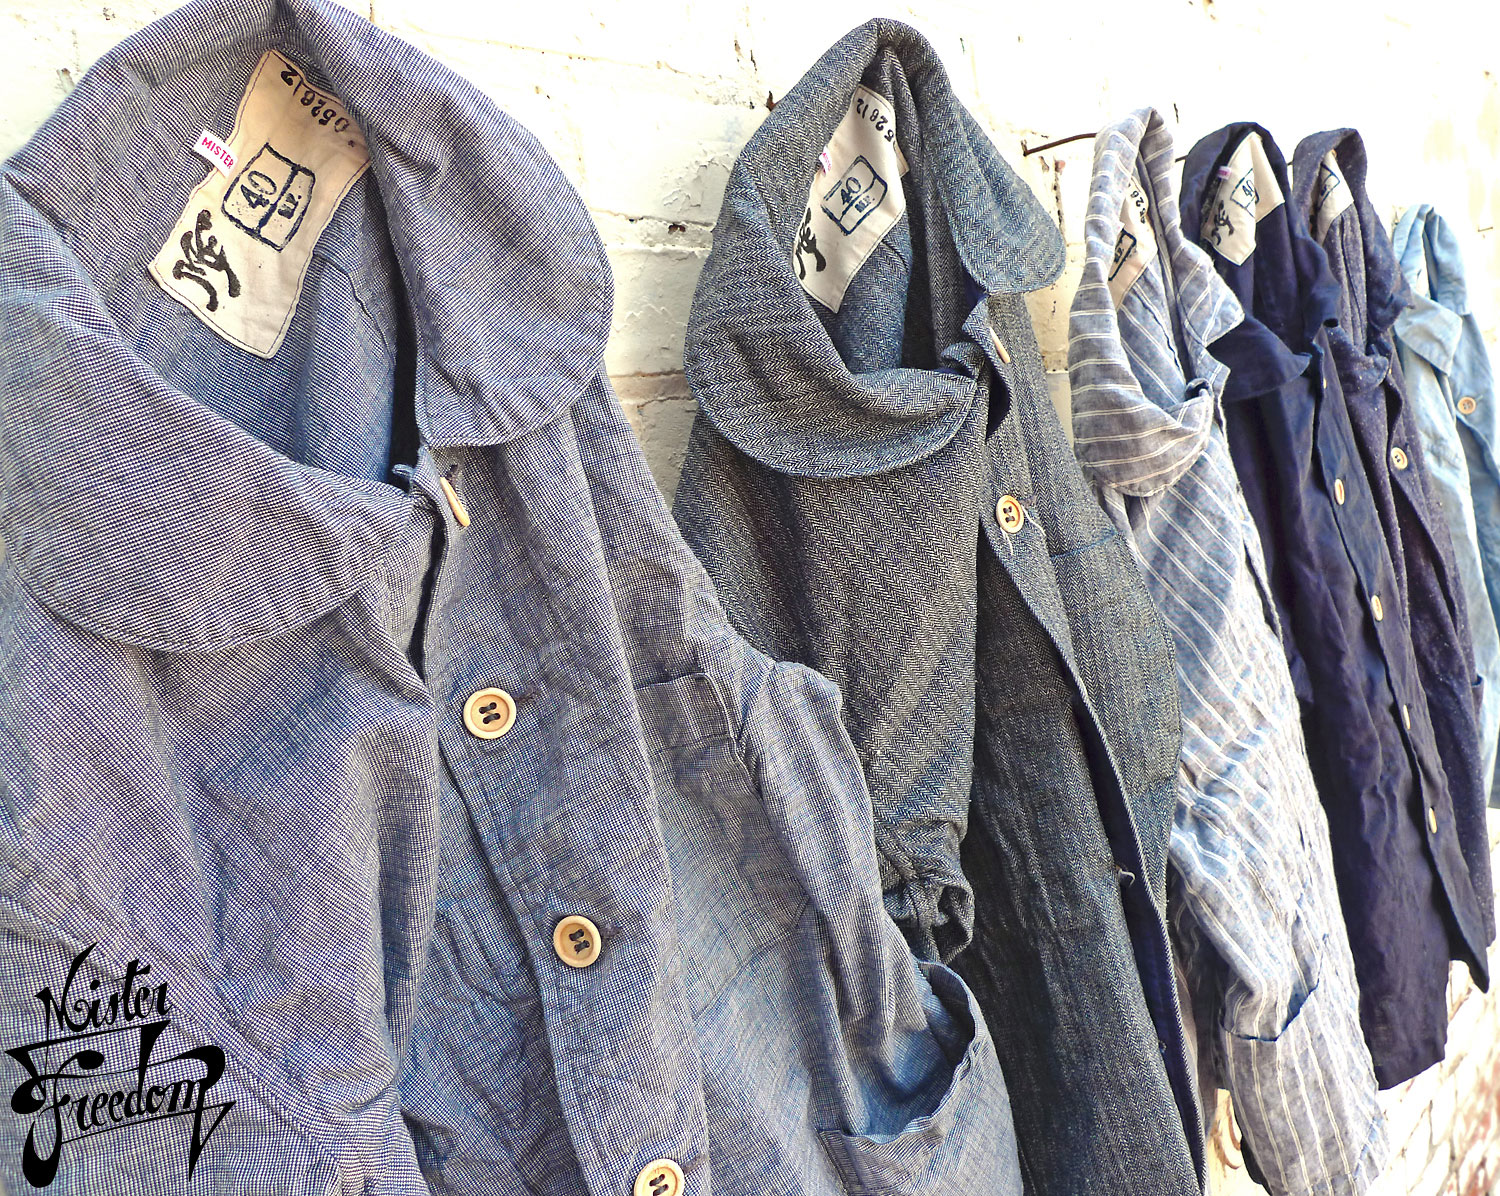 Mister Freedom® vintage fabrics “Cotton Sack Coats 